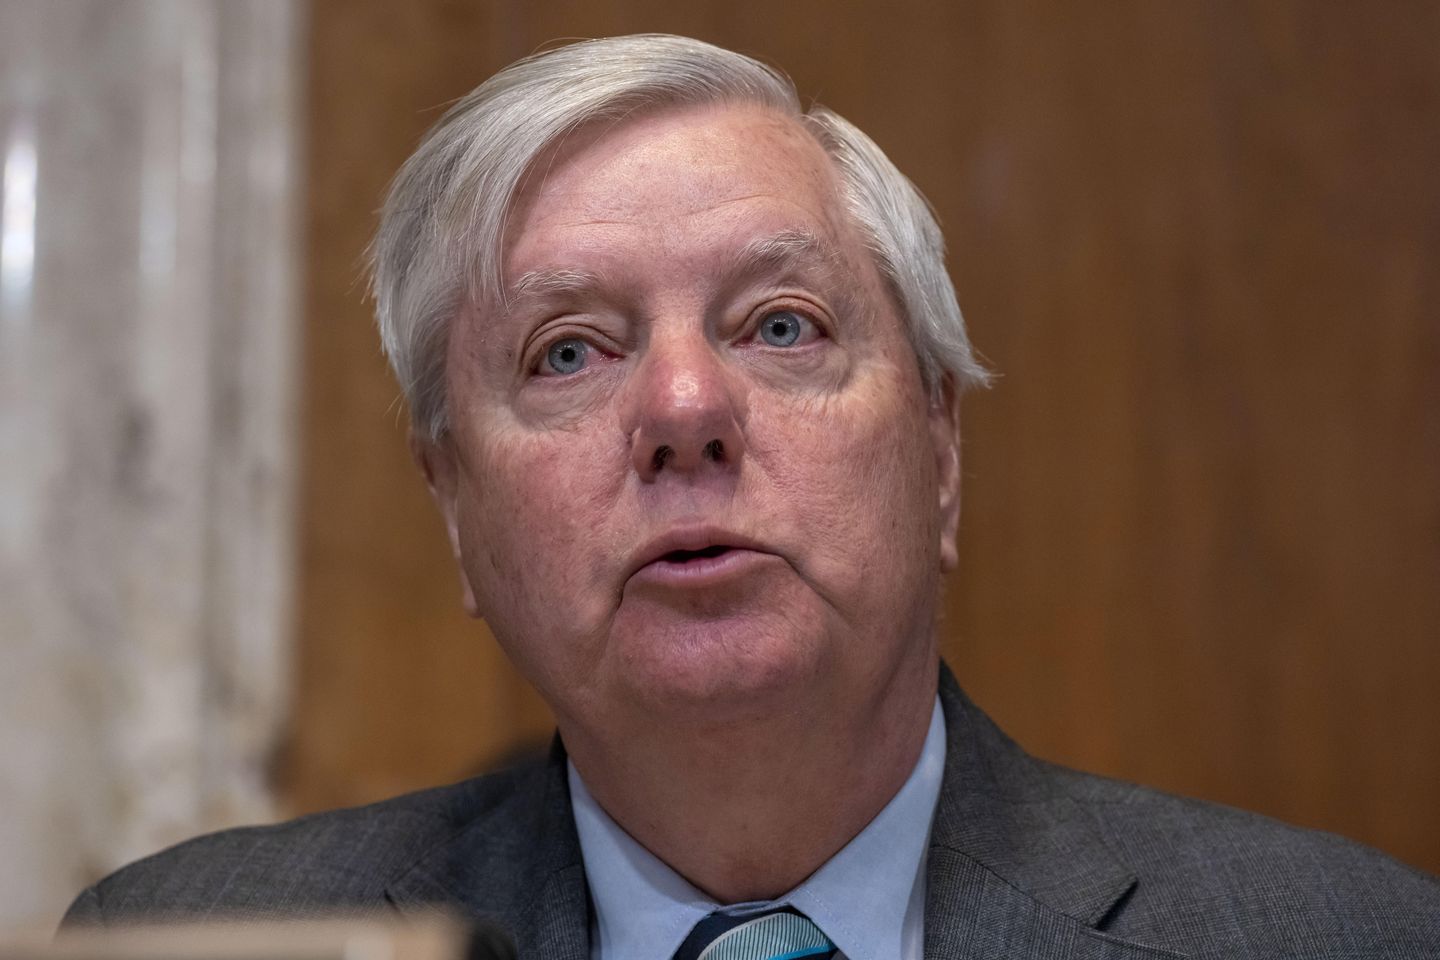 Komite Etika Senat menegur Senator Lindsey Graham